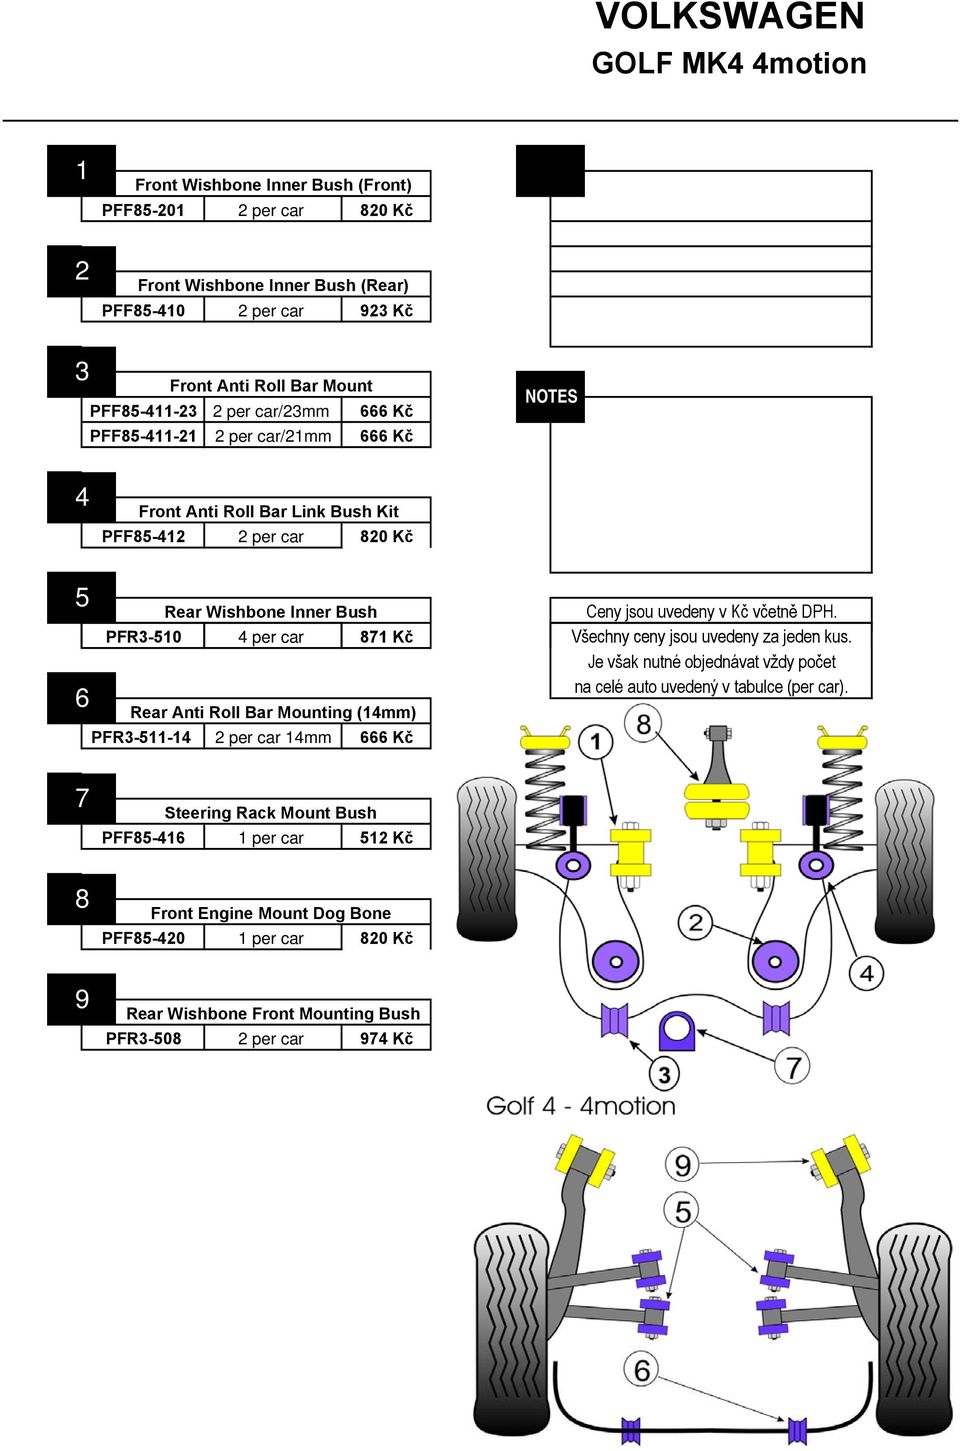 Wishbone Inner Bush PFR-0 per car 8 Kč Rear Anti Roll Bar Mounting (mm) PFR-- per car mm 666 Kč PFF8-6 Steering Rack